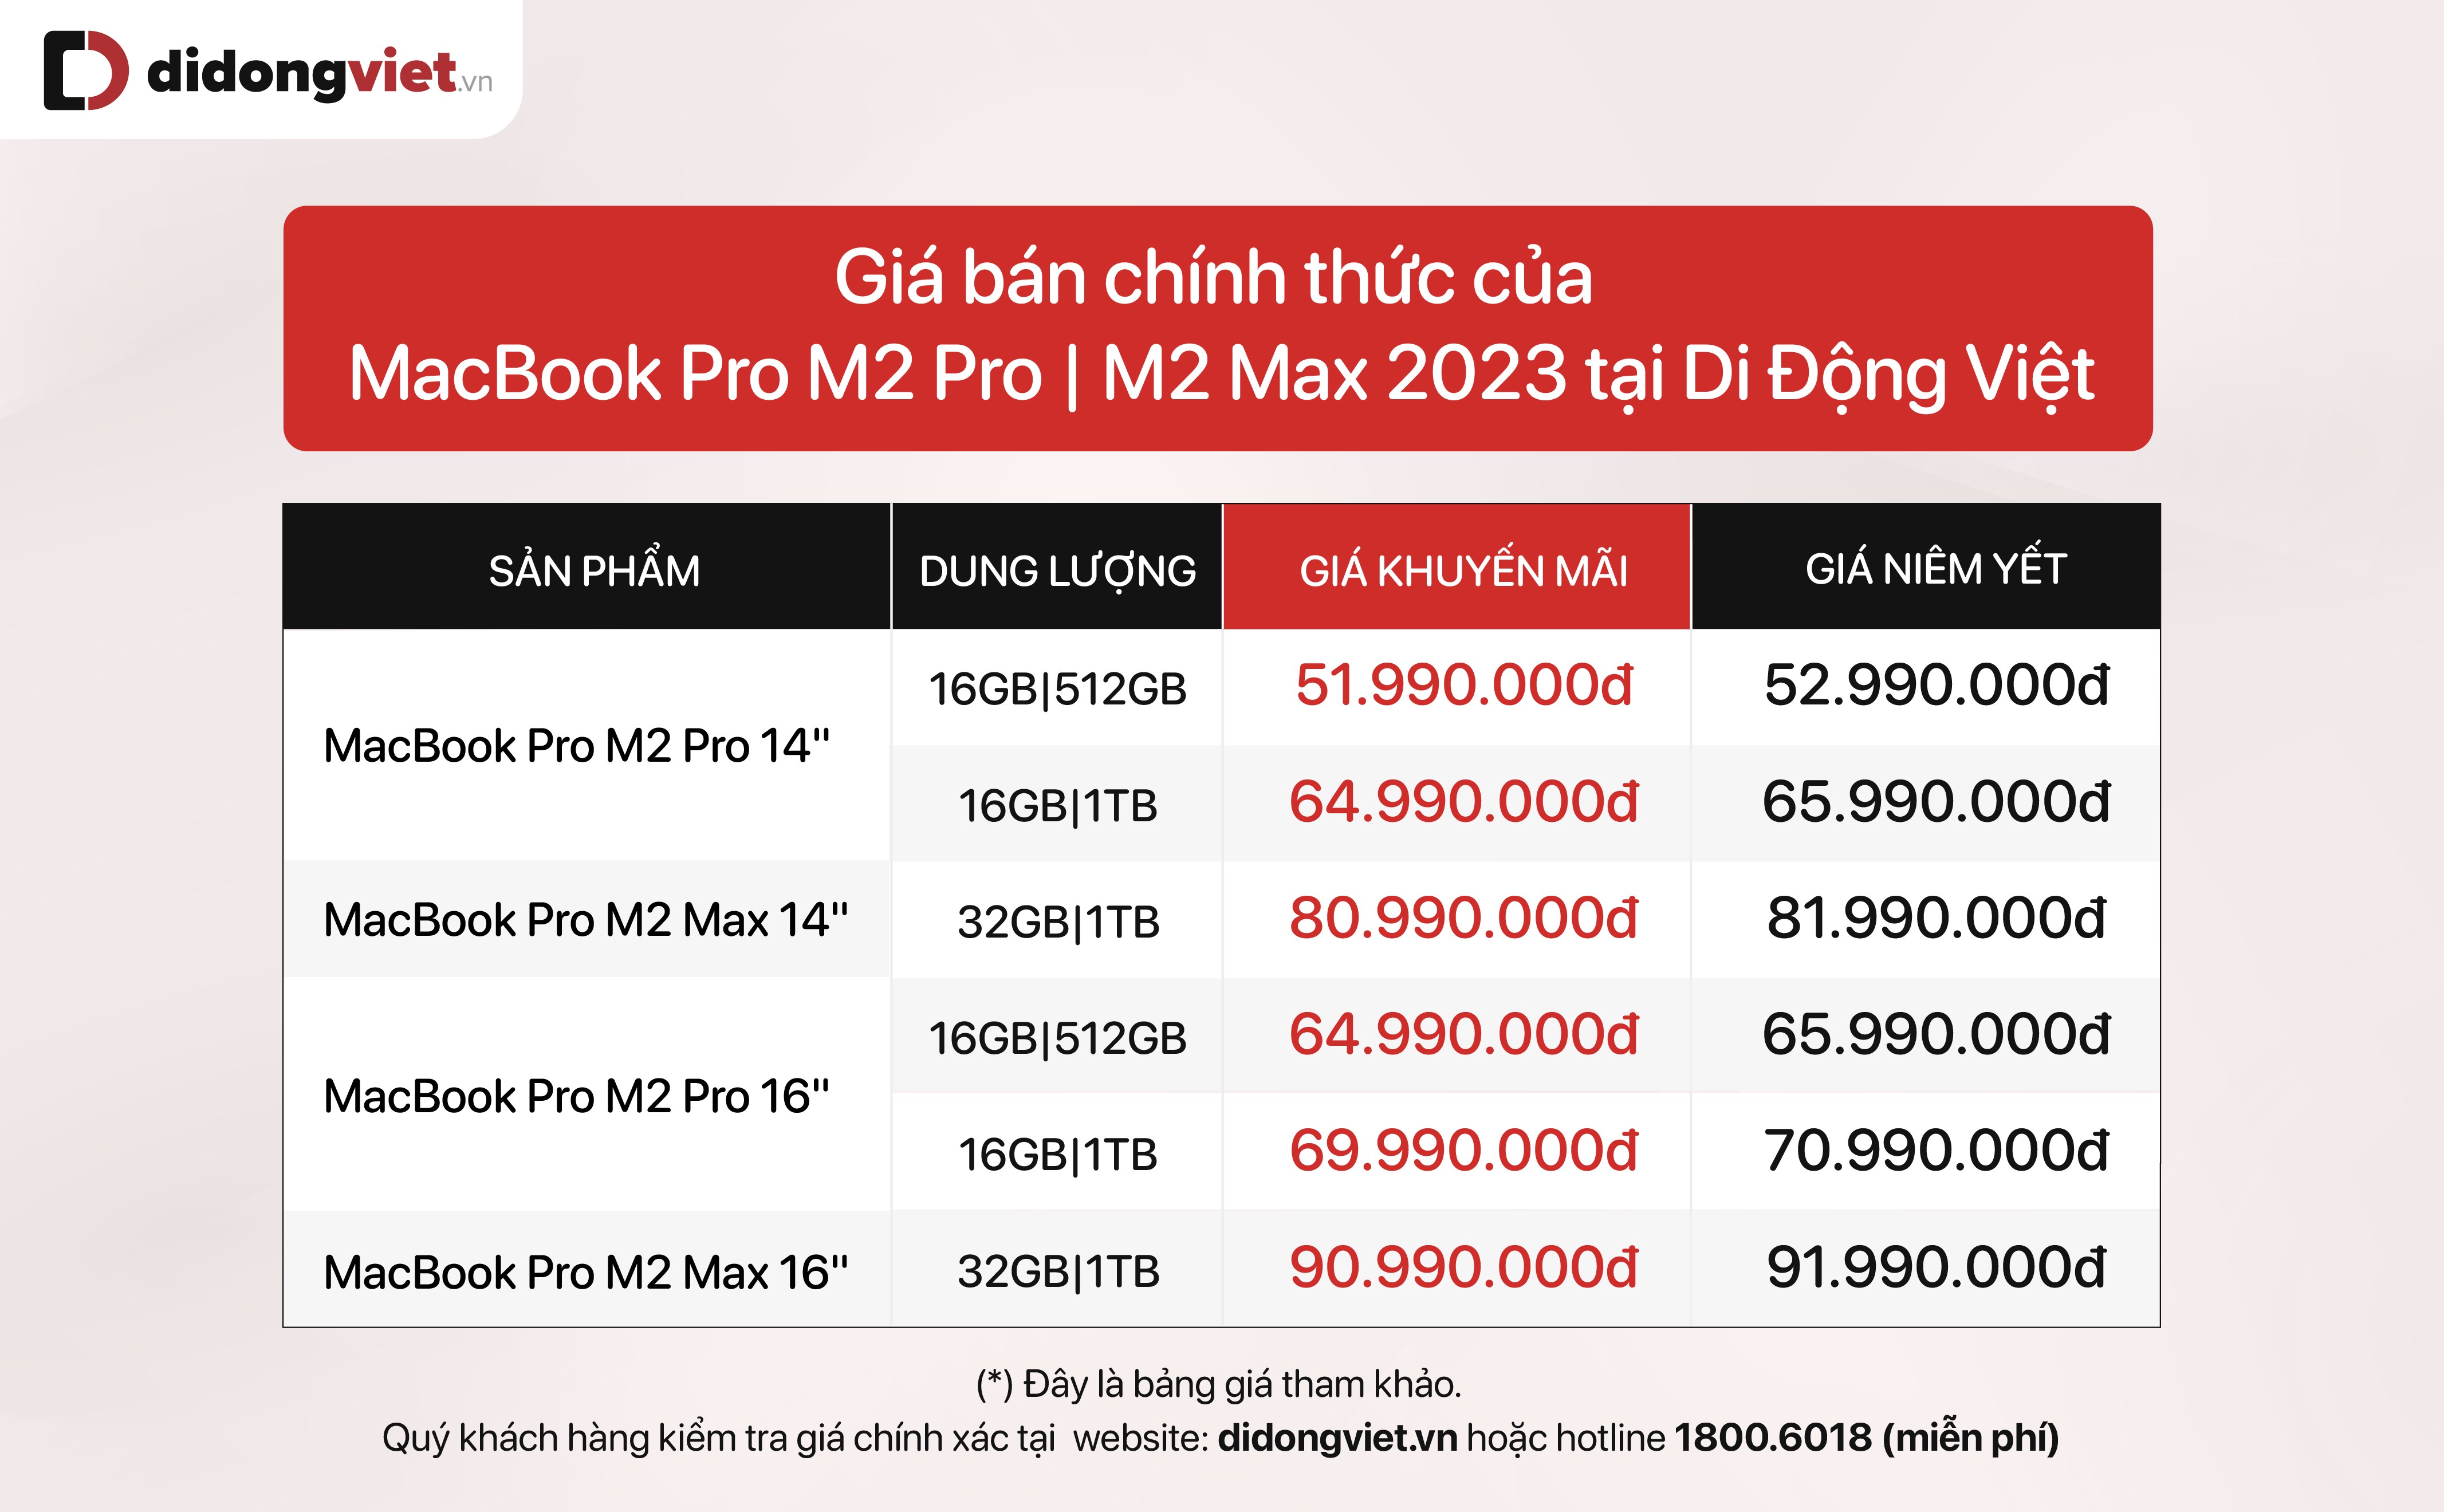 bang-gia-chinh-thuc-macbook-pro-m2-2023-tai-di-dong-viet-1678433777.jpg